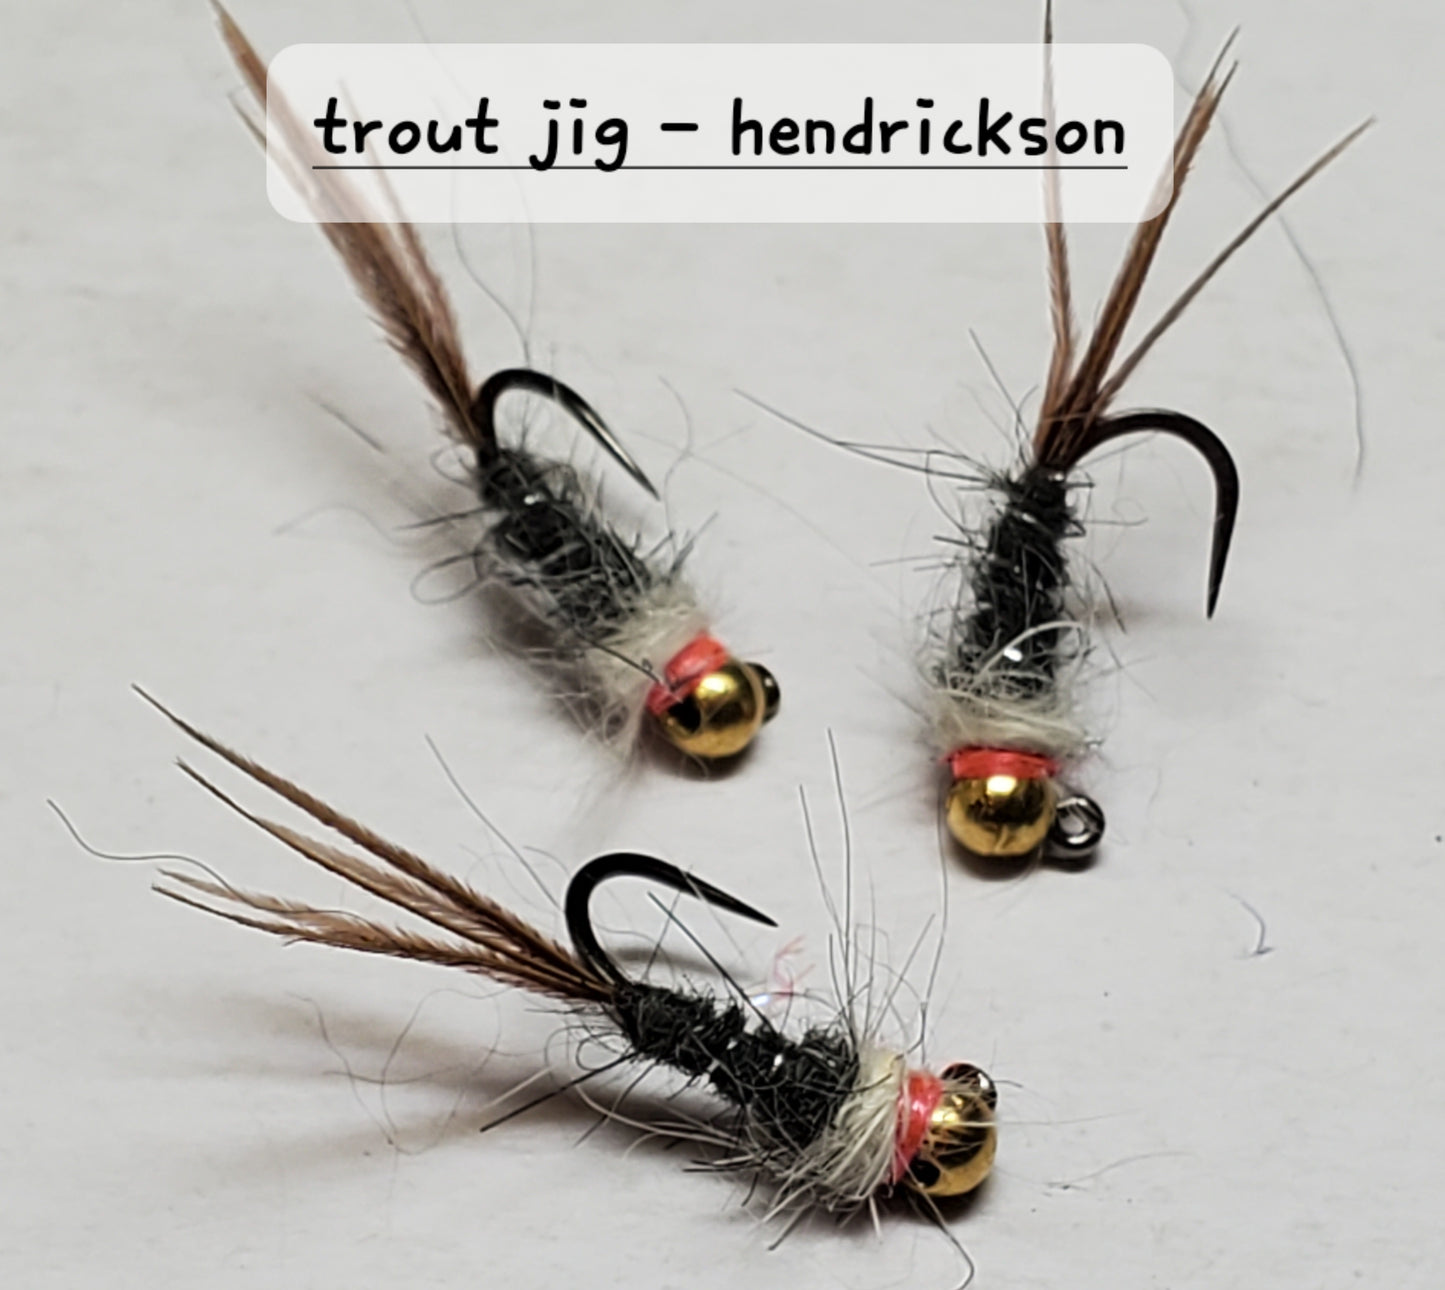 Trout Jig Hendrickson, Tungsten Bead Head Trout Jig, Trout Jig Nymph, Bead Head Nymph,